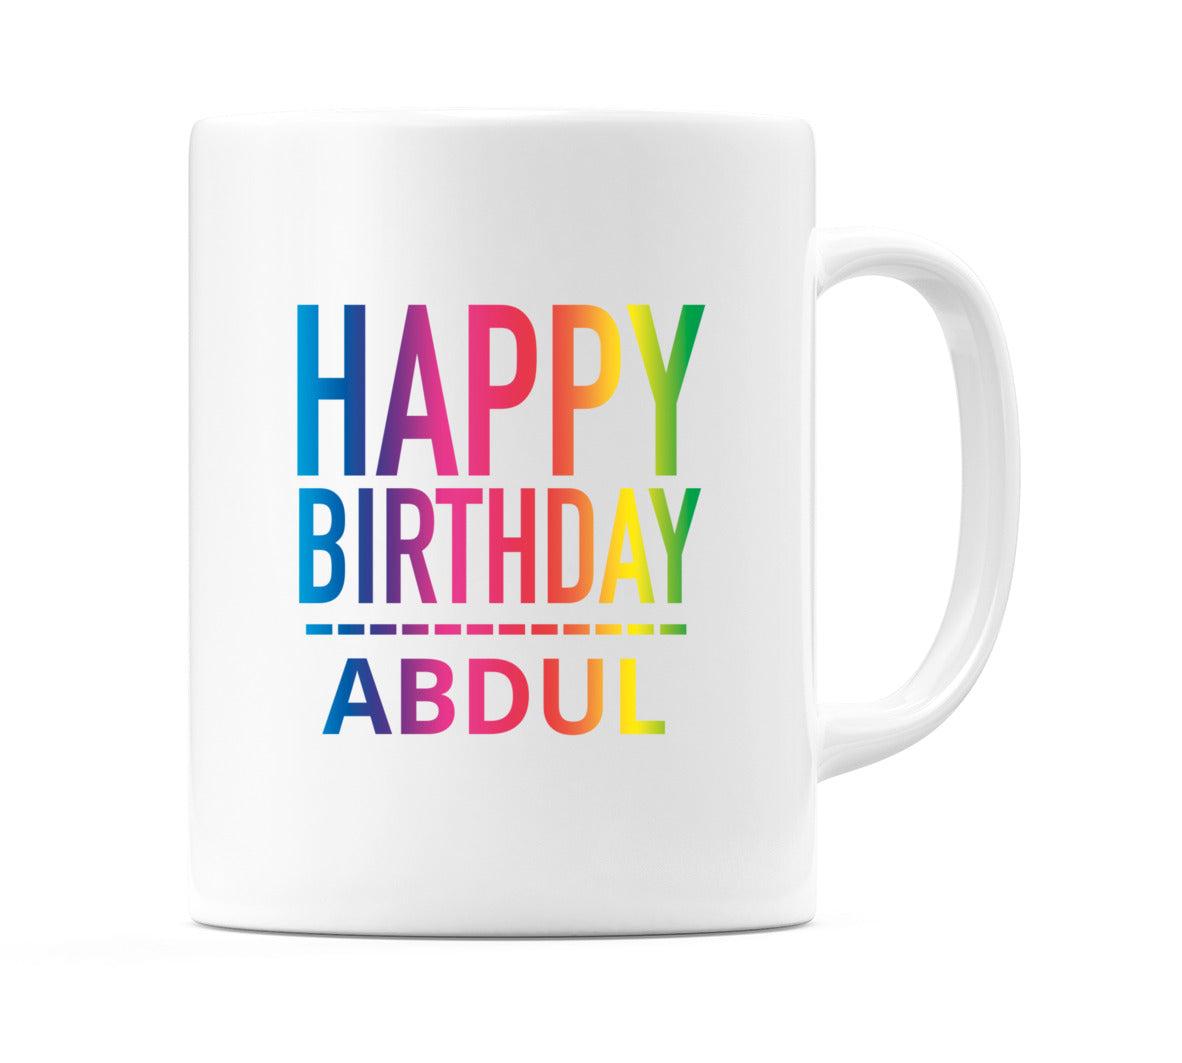 Happy Birthday Abdul (Rainbow) Mug Cup by WeDoMugs